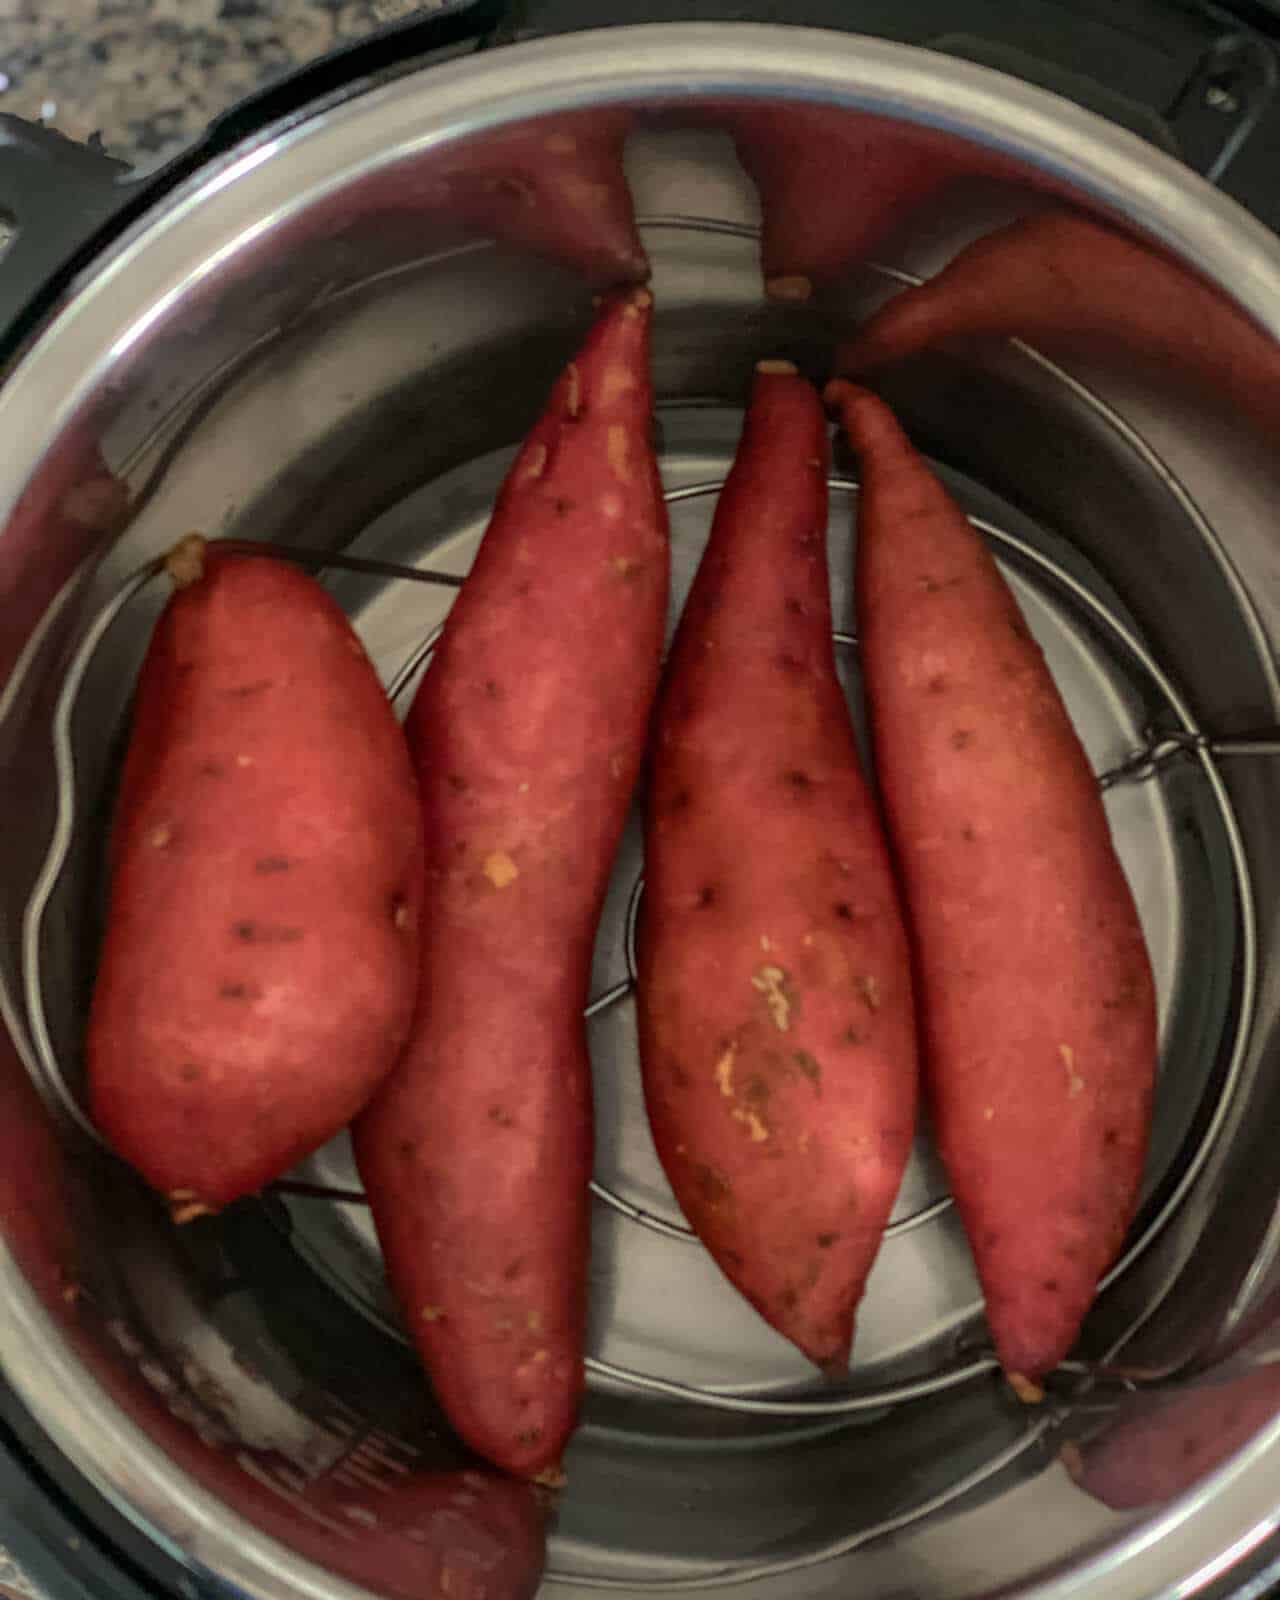 Four sweet potatoes on a trivet inside an instant pot pressure cooker.